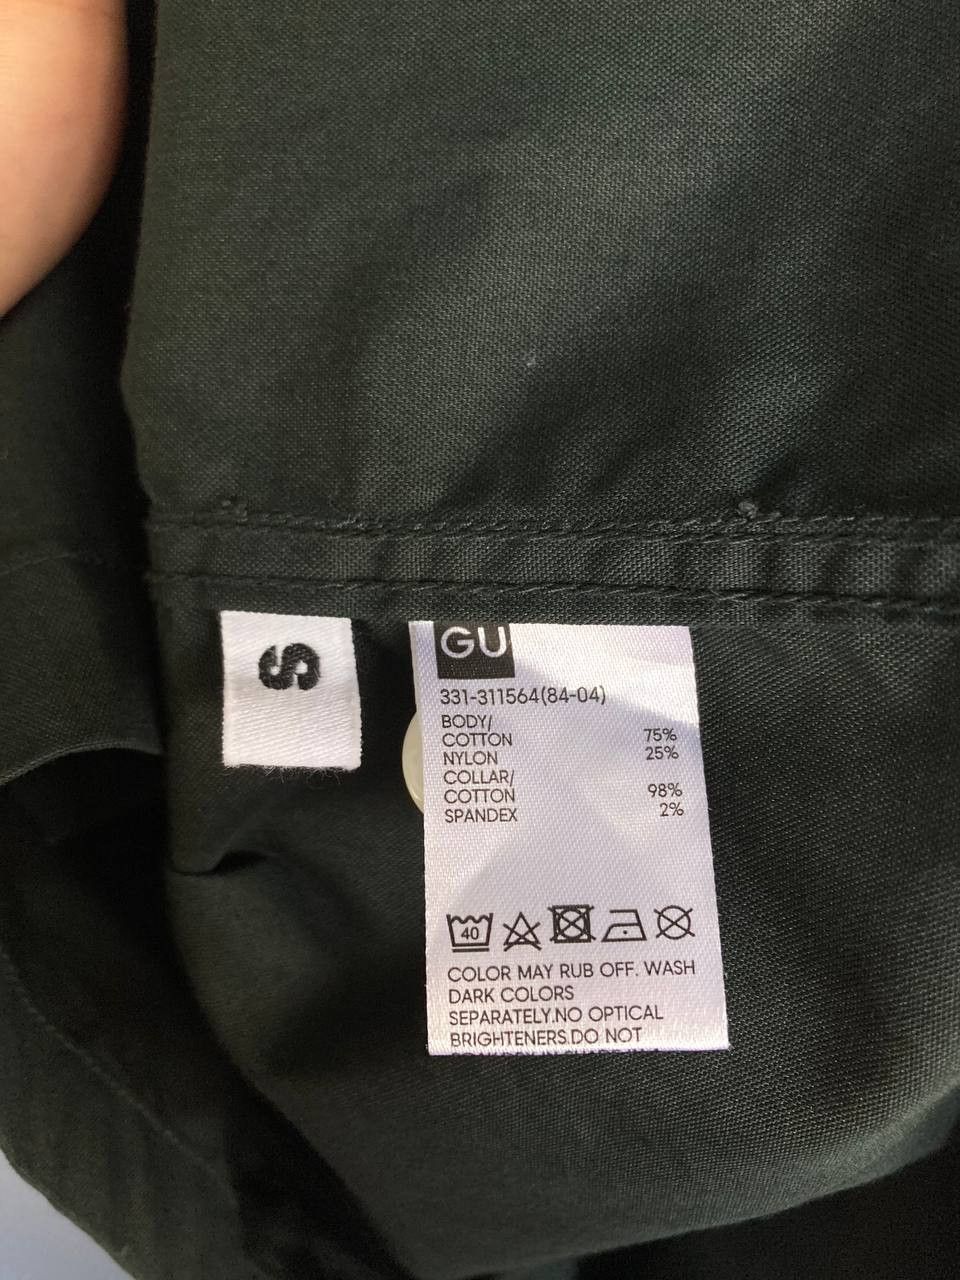 AW18 Kim Jones x GU Military Strap Buttoned Shirt - 9